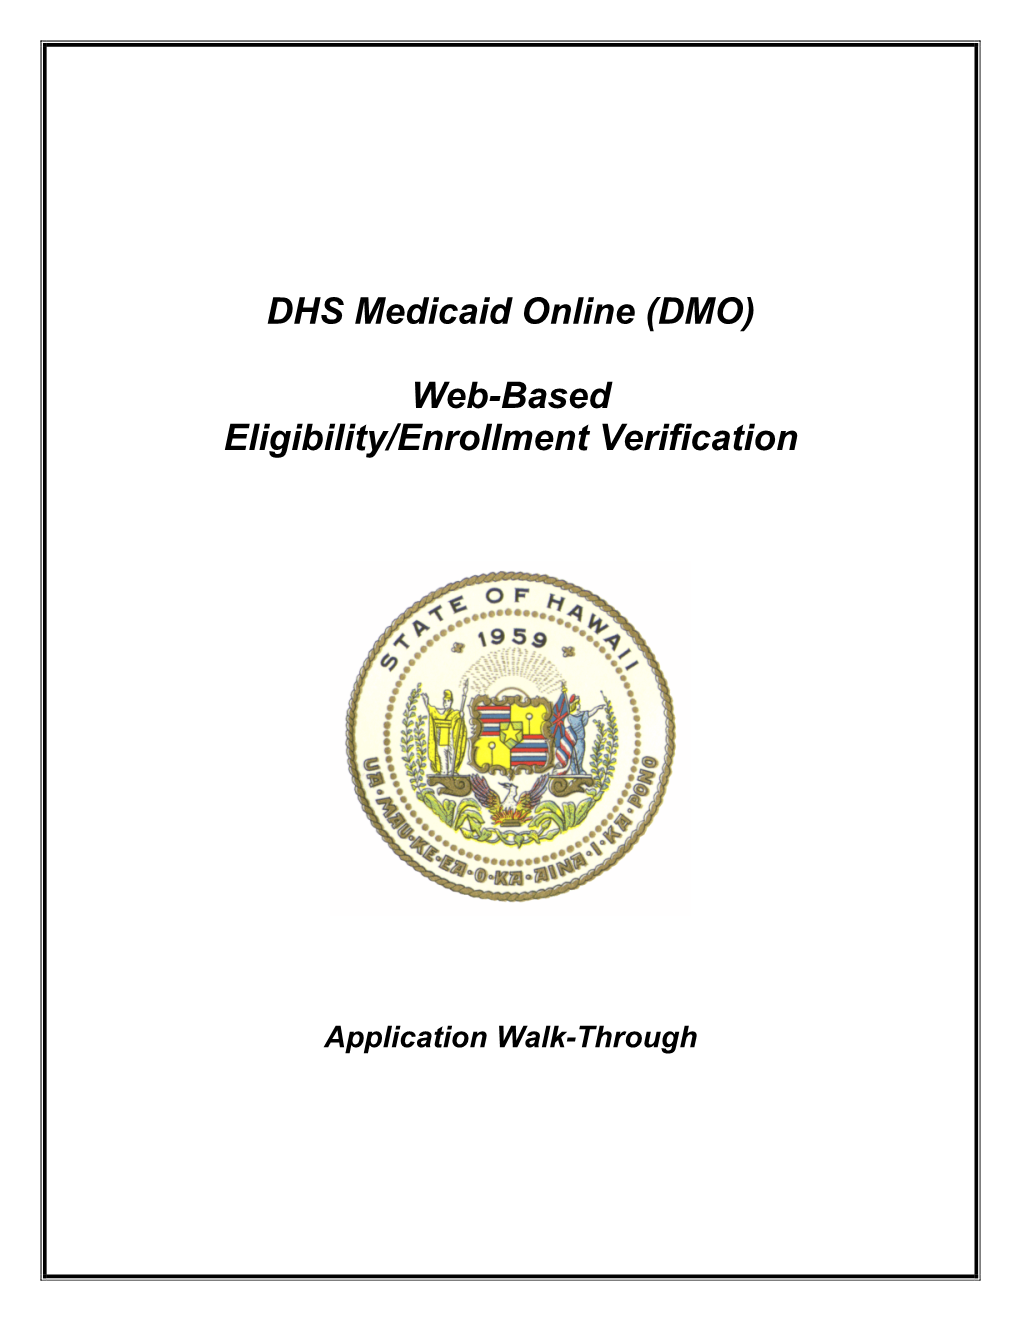 DHS Medicaid Online User Manual